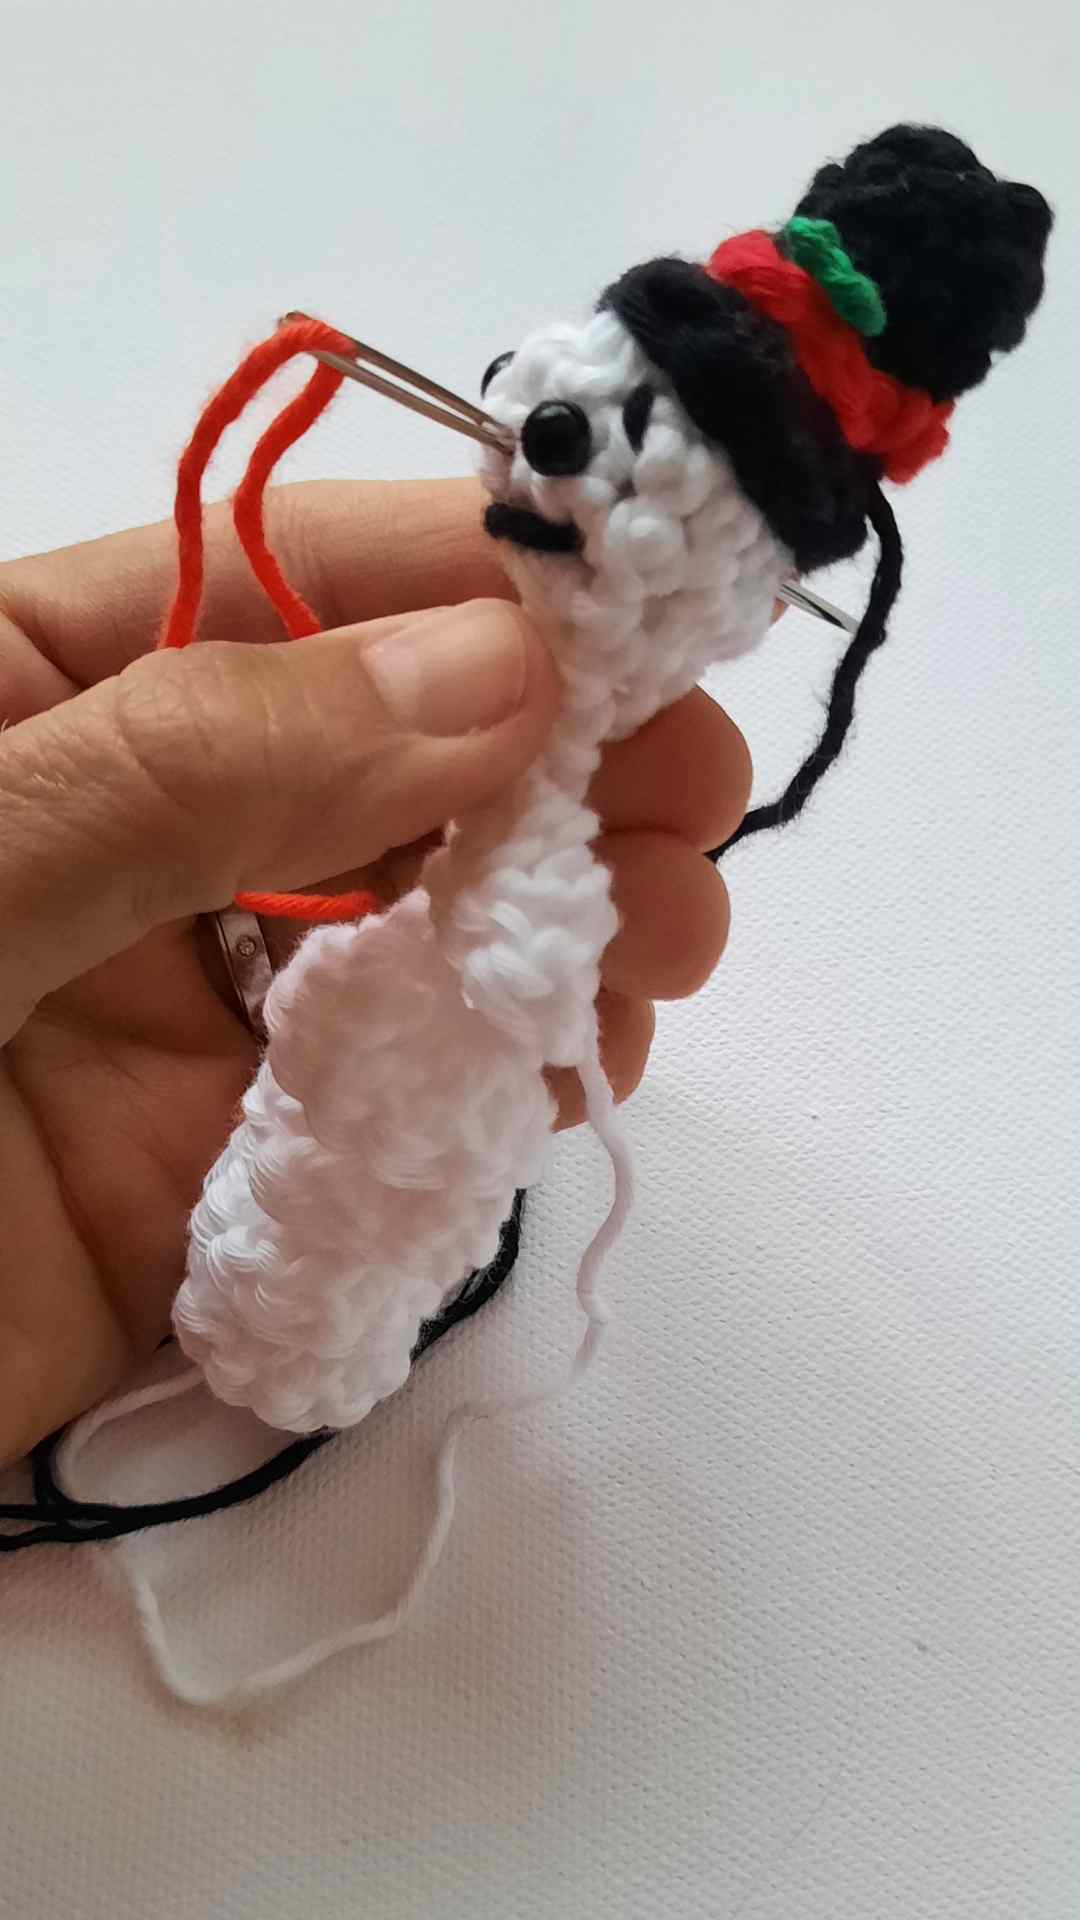 Crochet Snowman Ornament Free Pattern